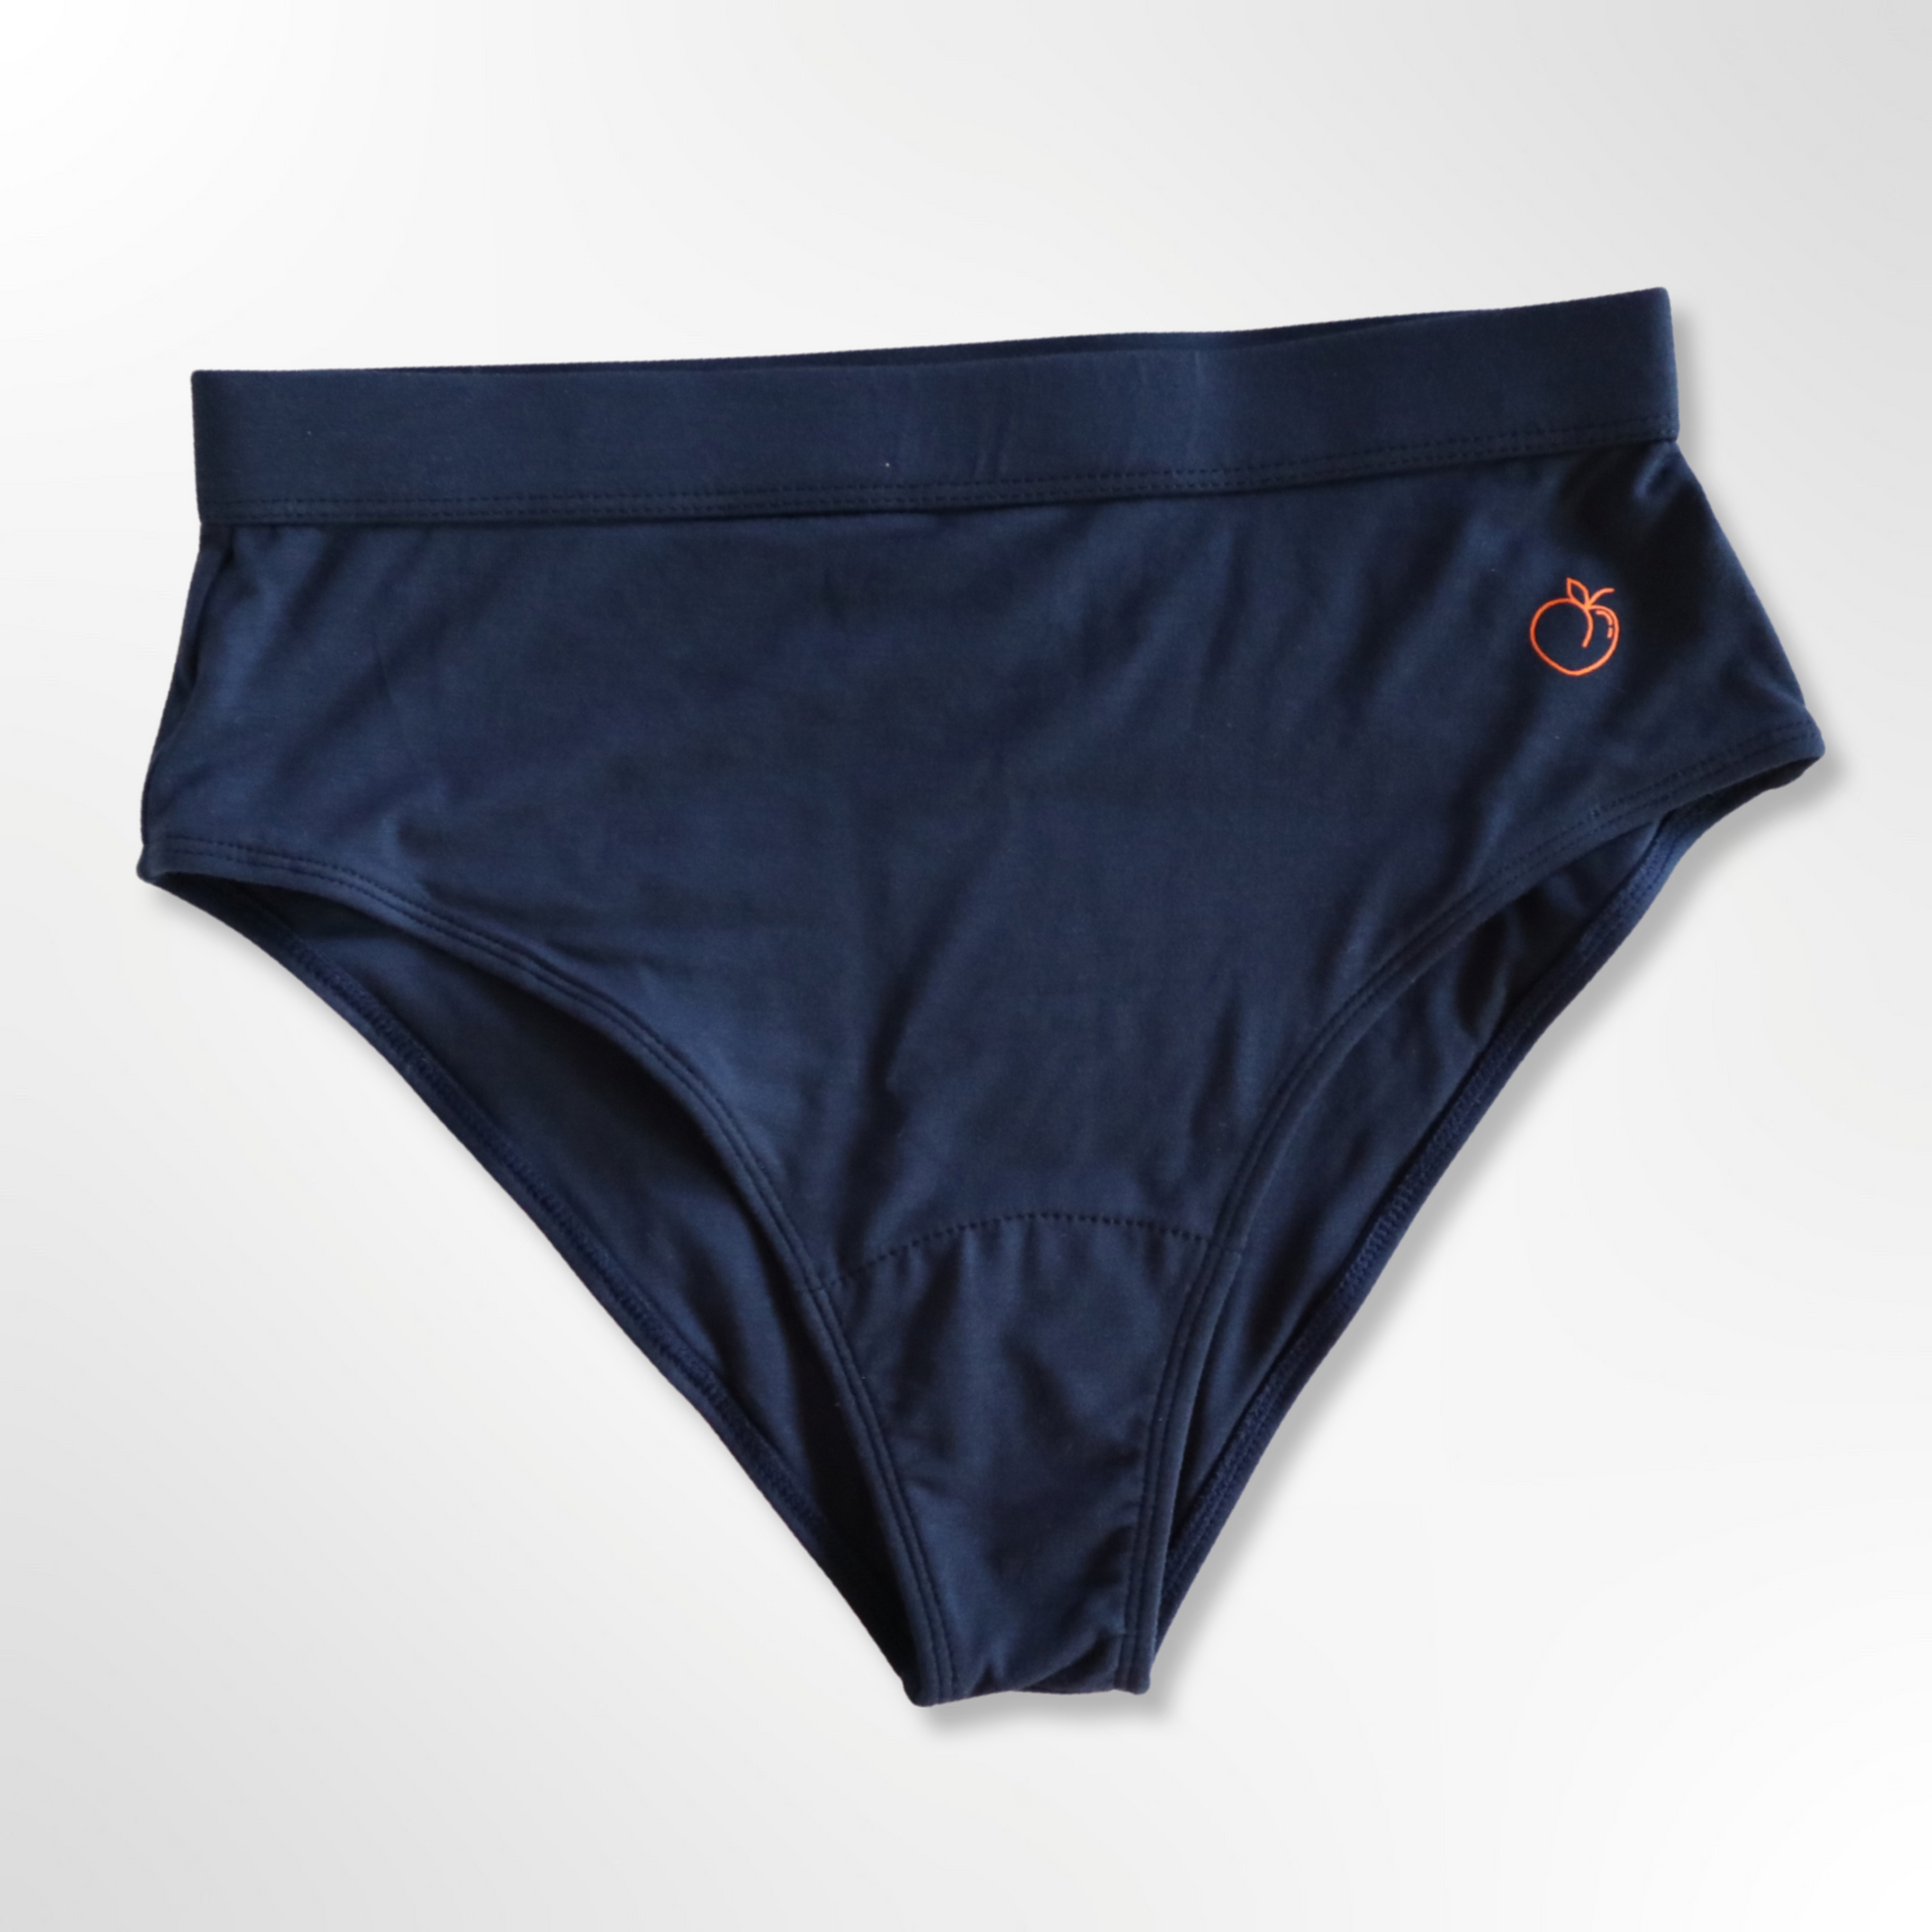 The Original Brief - Peach, Tencel Underwear